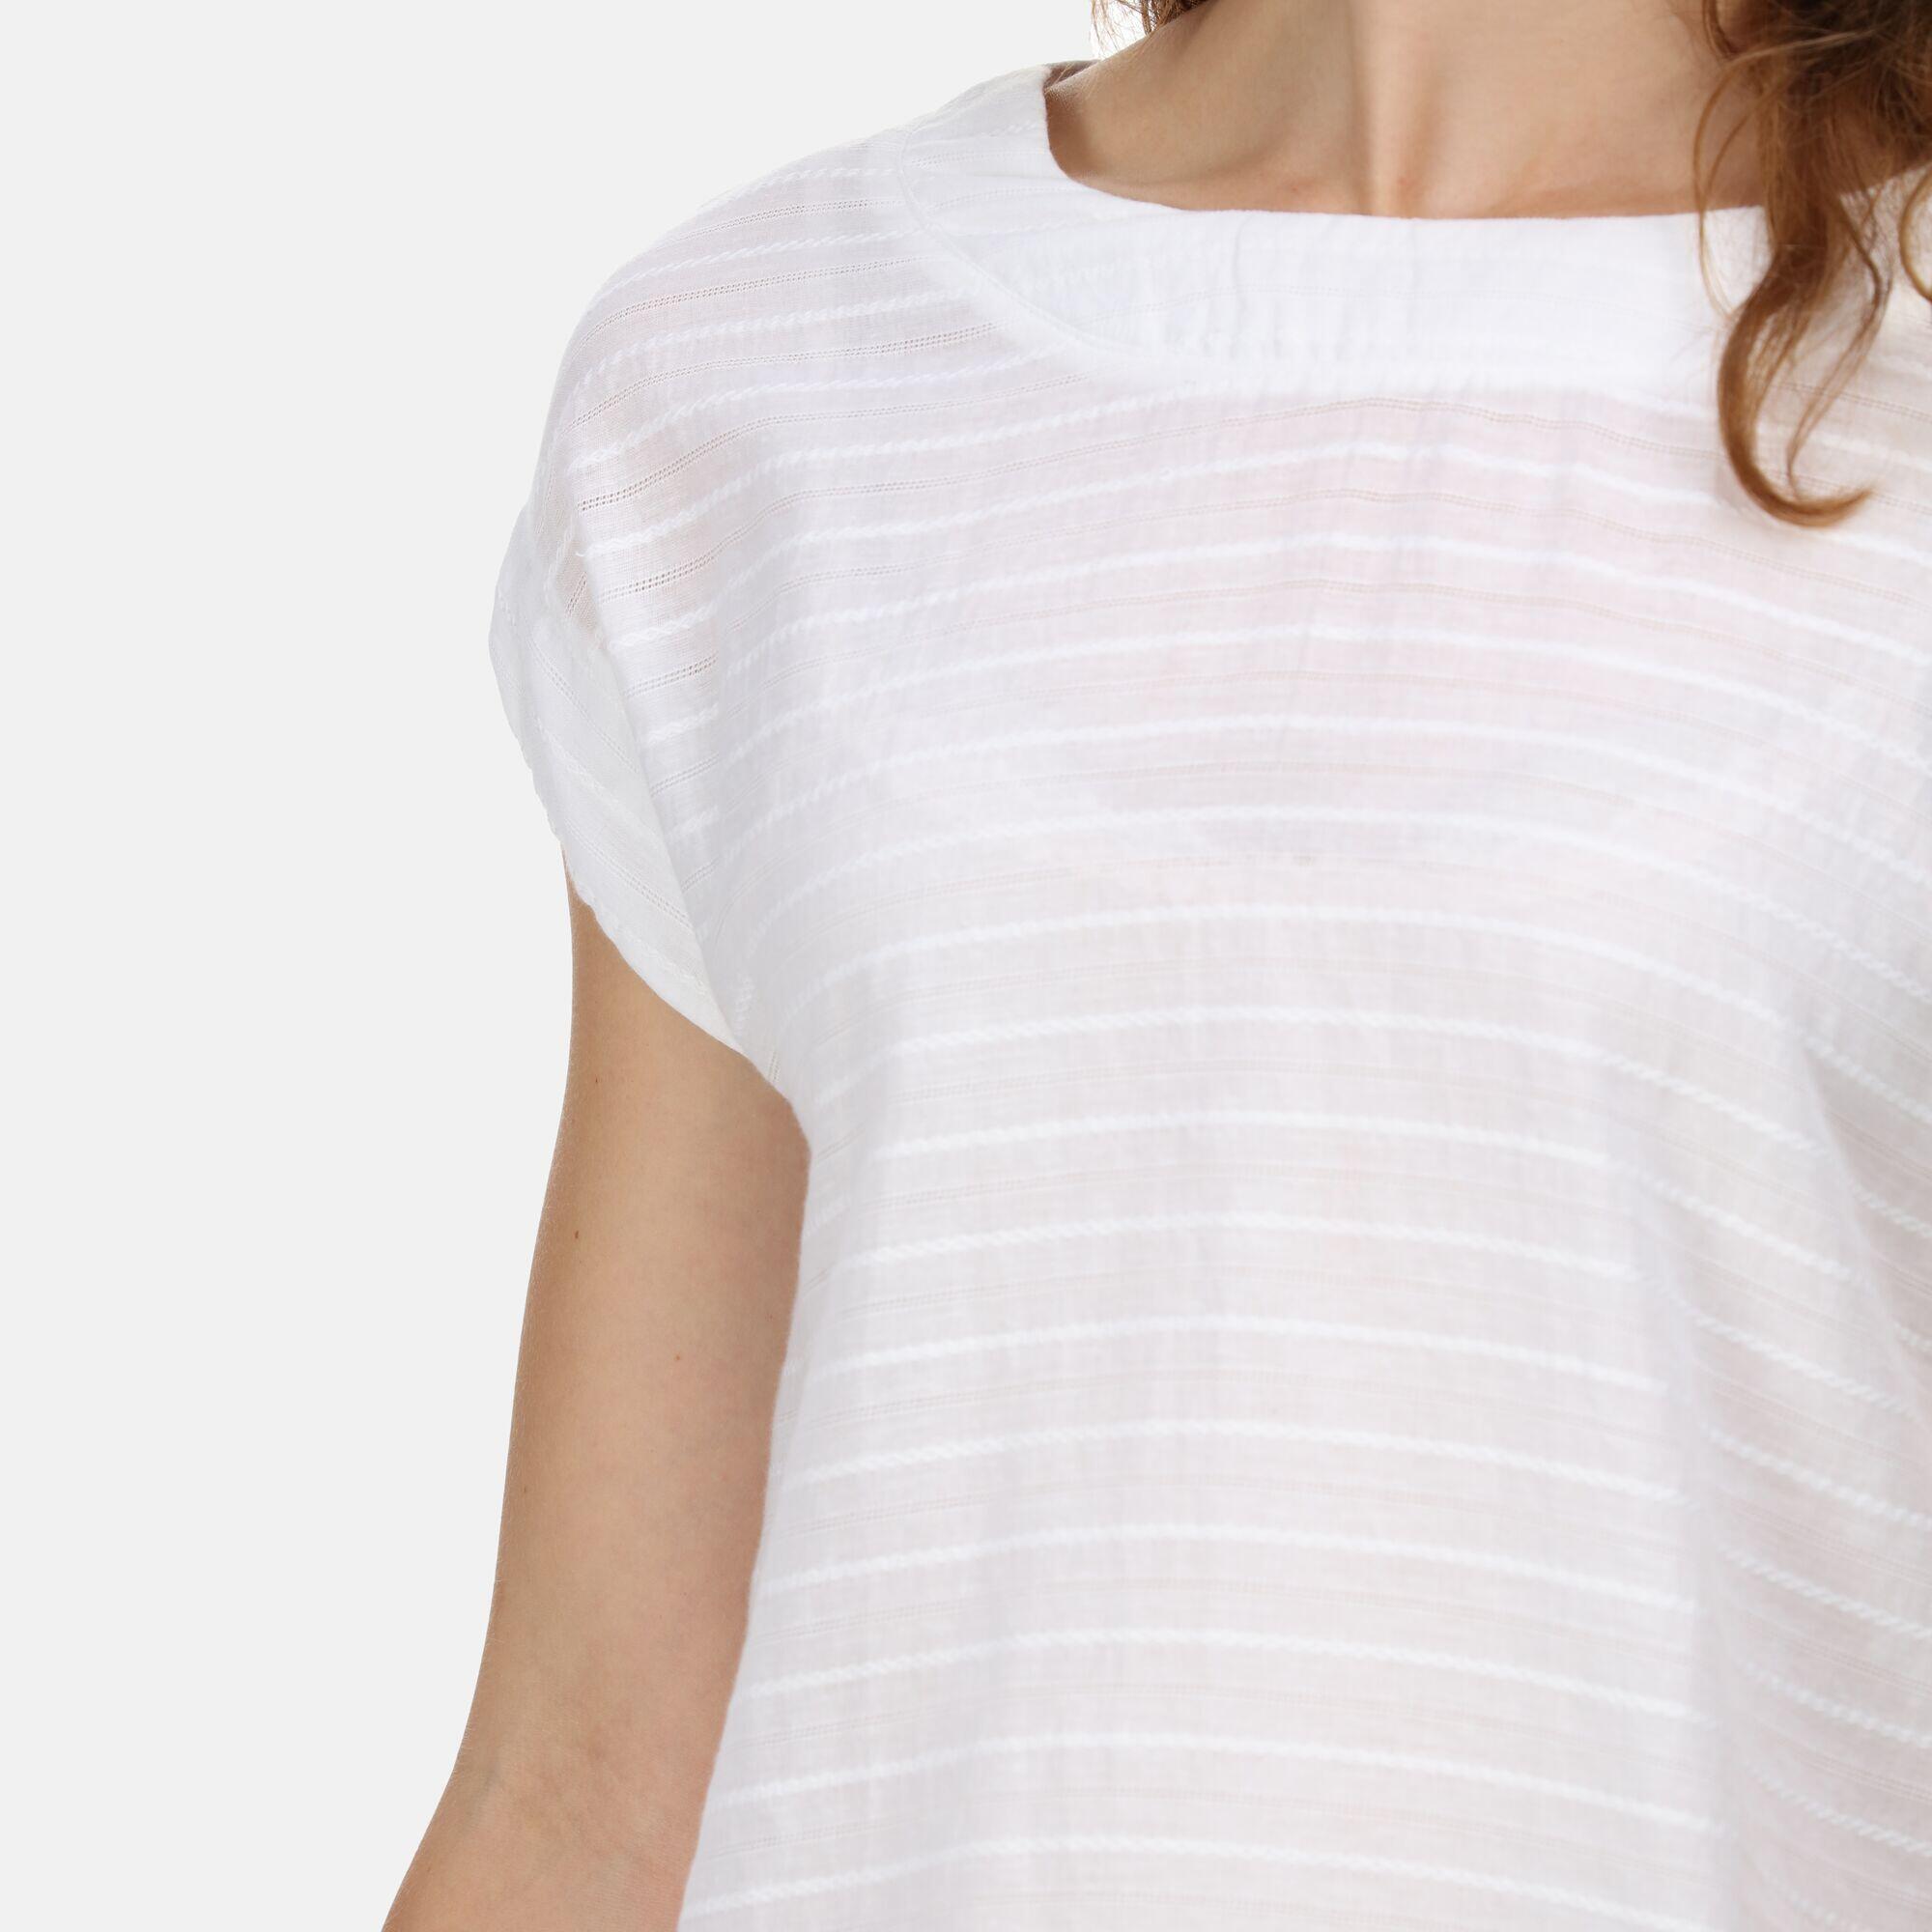 Adine Women's Walking Short Sleeve T-Shirt - White 4/5